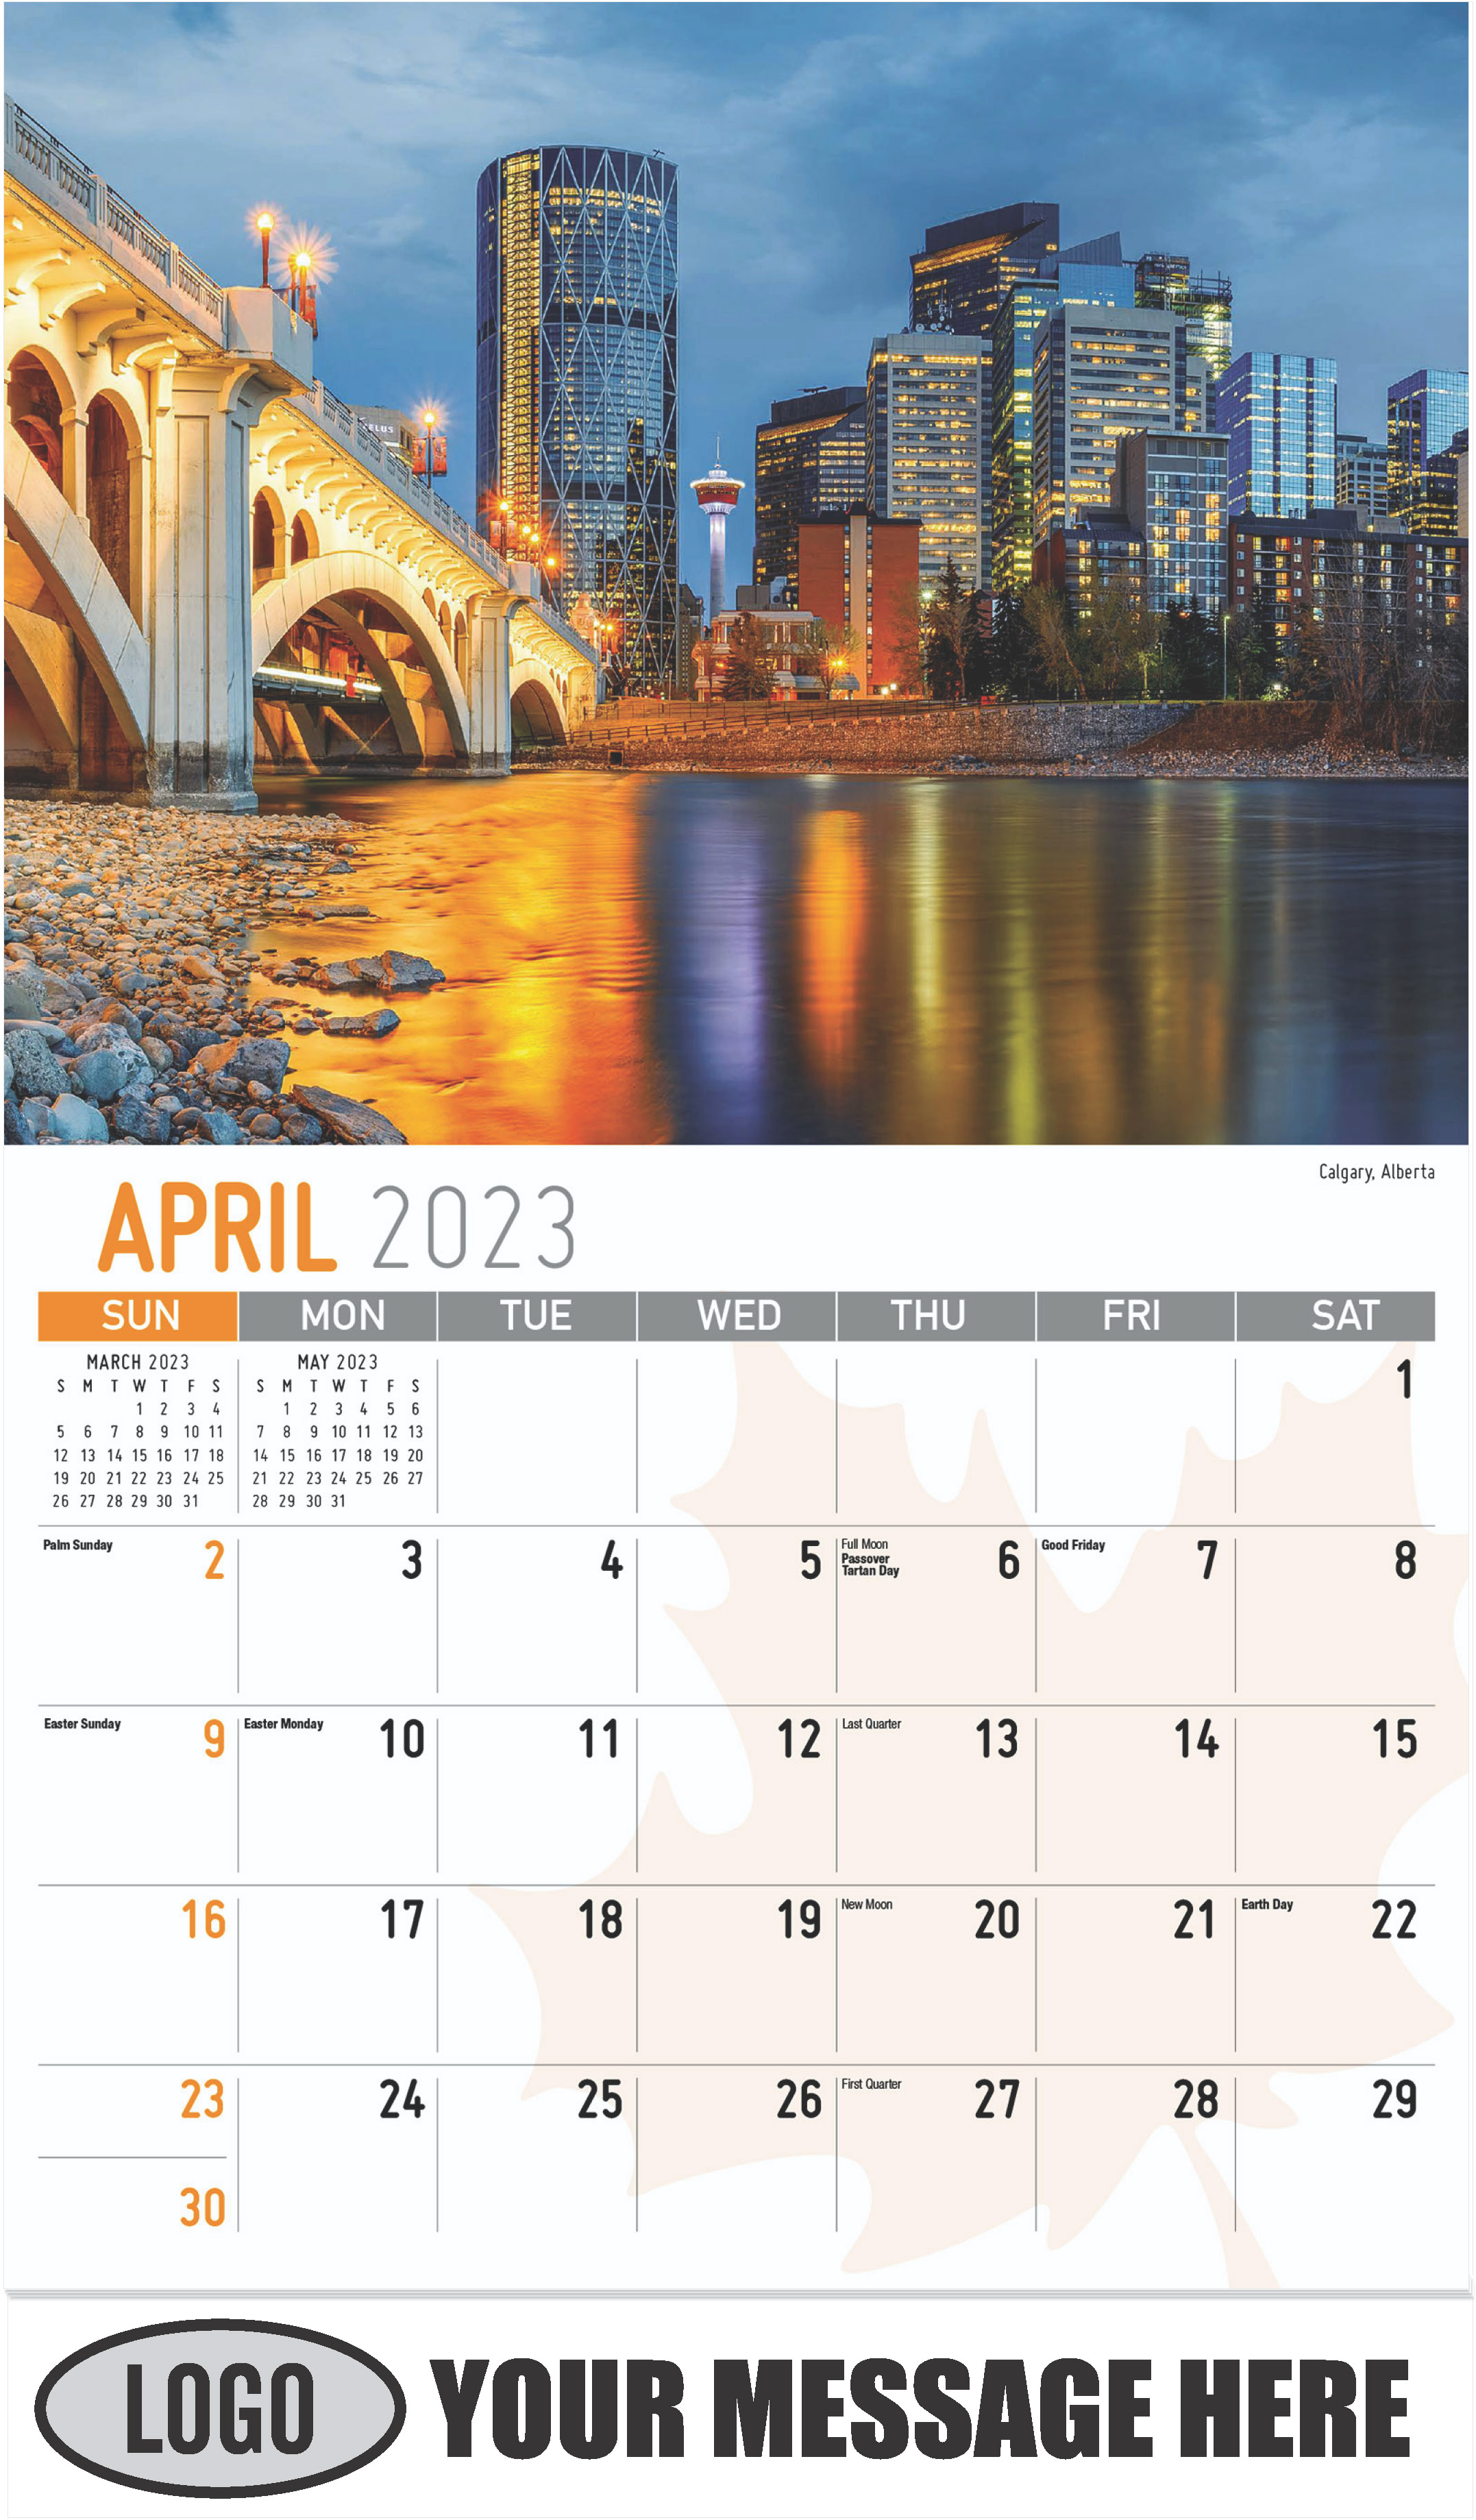 Calgary, Alberta - April - Scenes of Canada 2023 Promotional Calendar